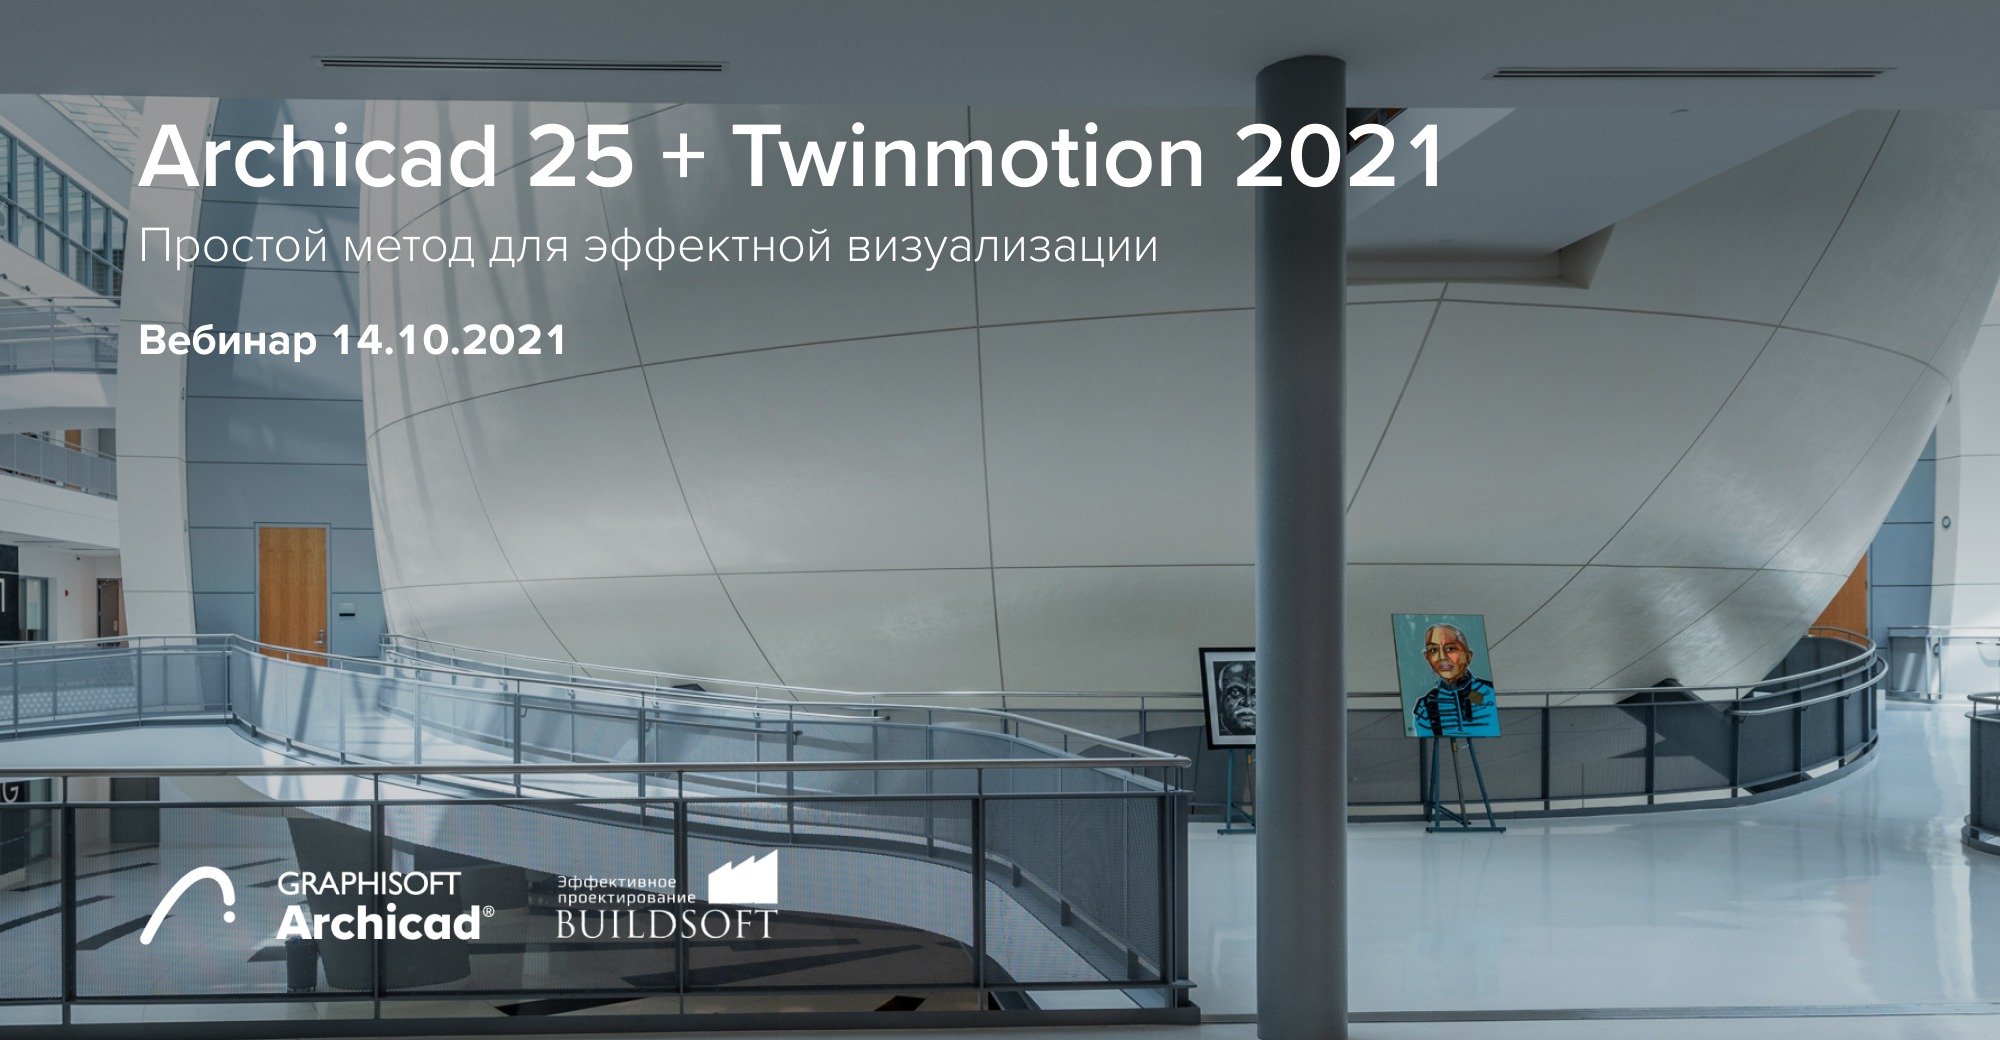 twinmotion 2021 archicad